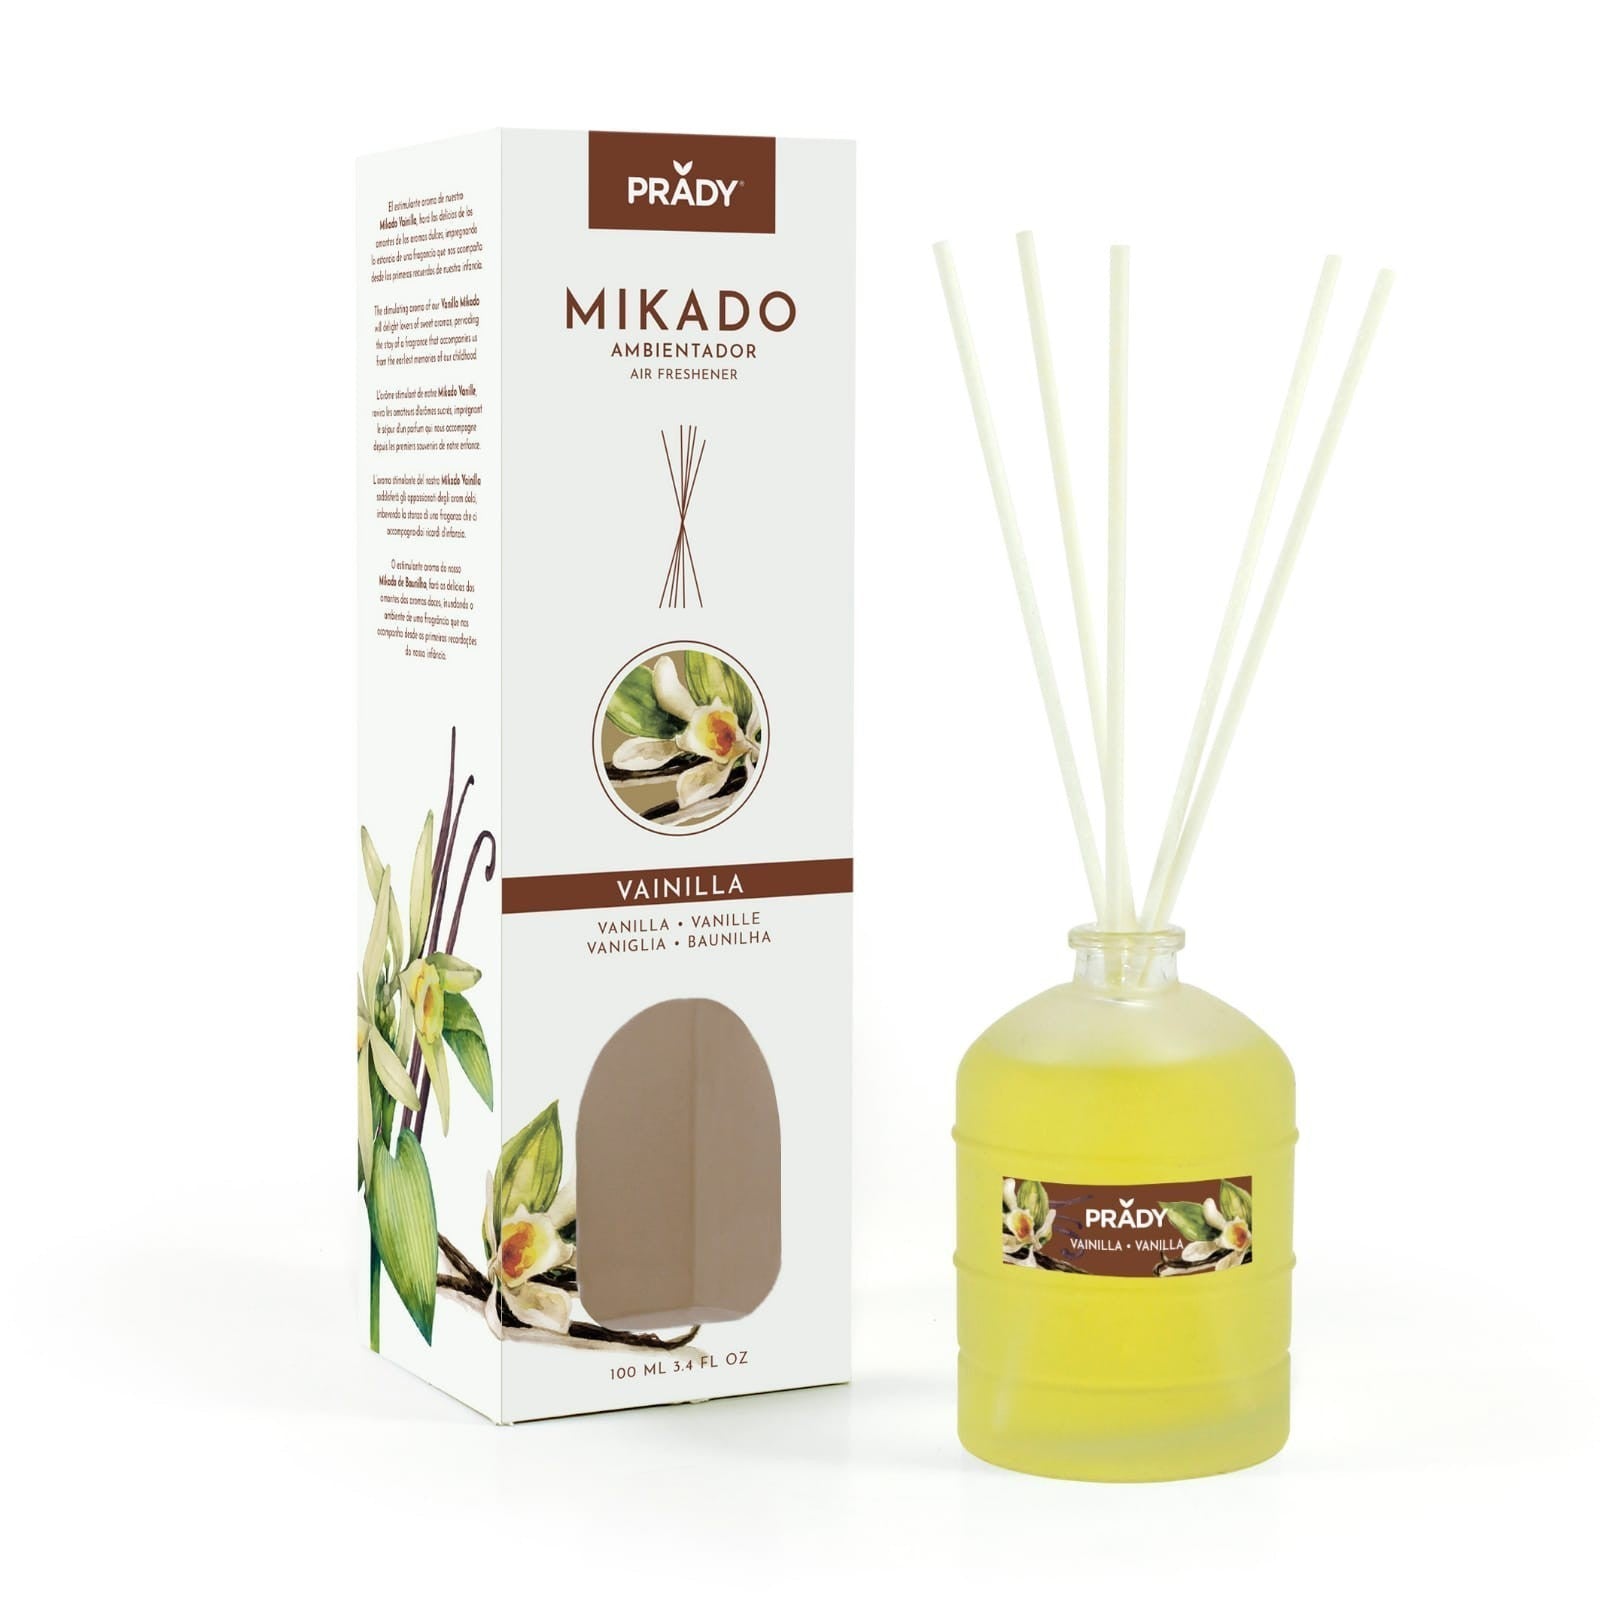 MIKADO "VANILLE" 100 ml de perfumes prady